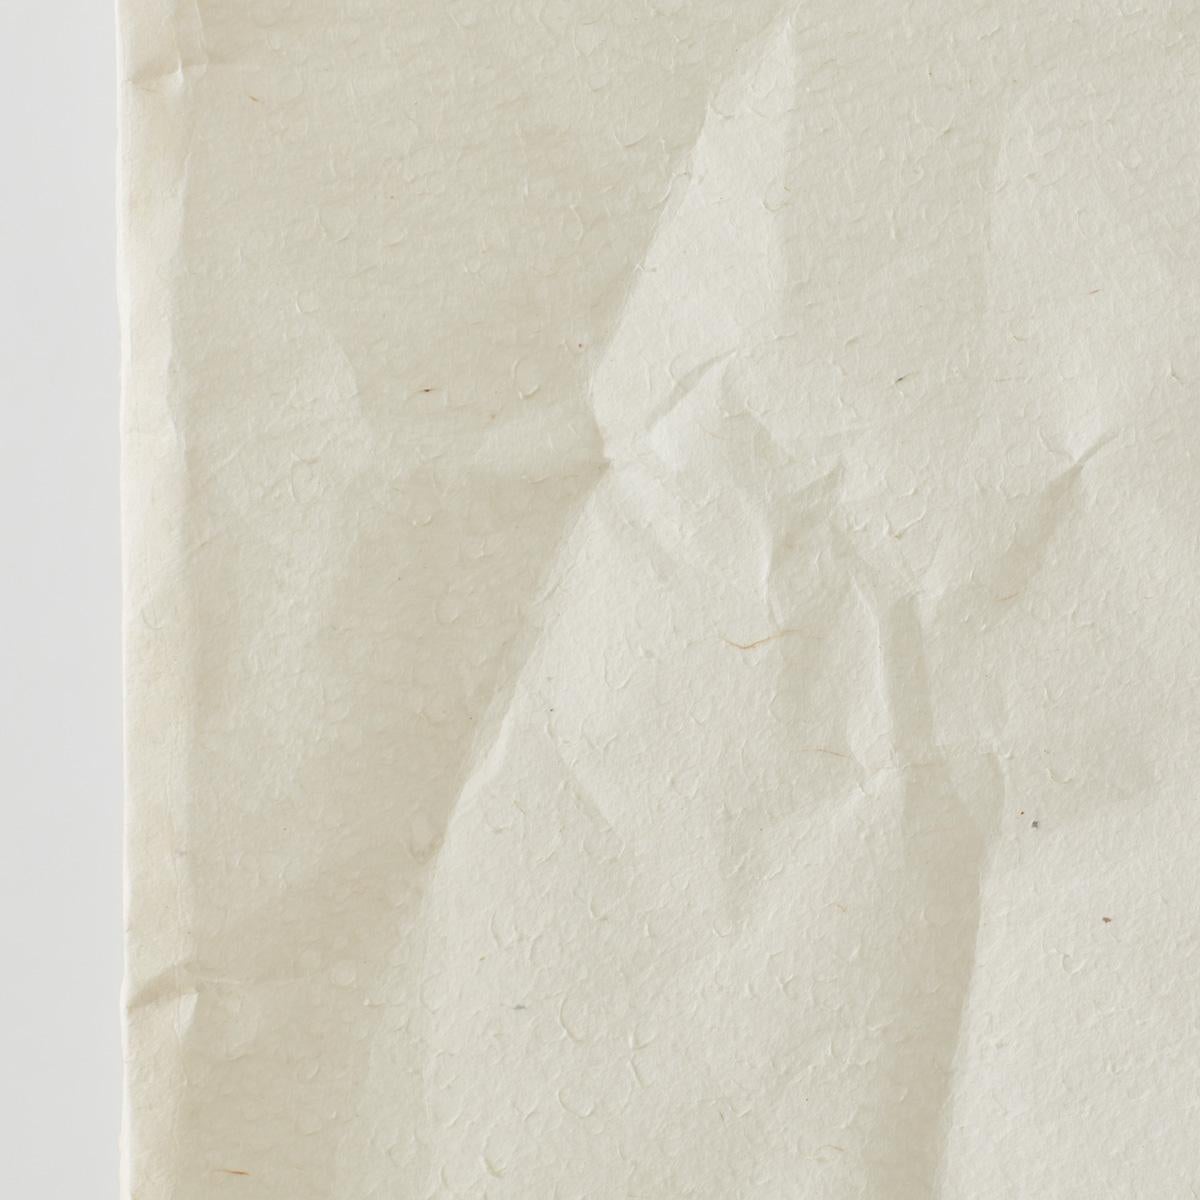 David Horan Paper Floor Light for Béton Brut, UK 2022 For Sale 7